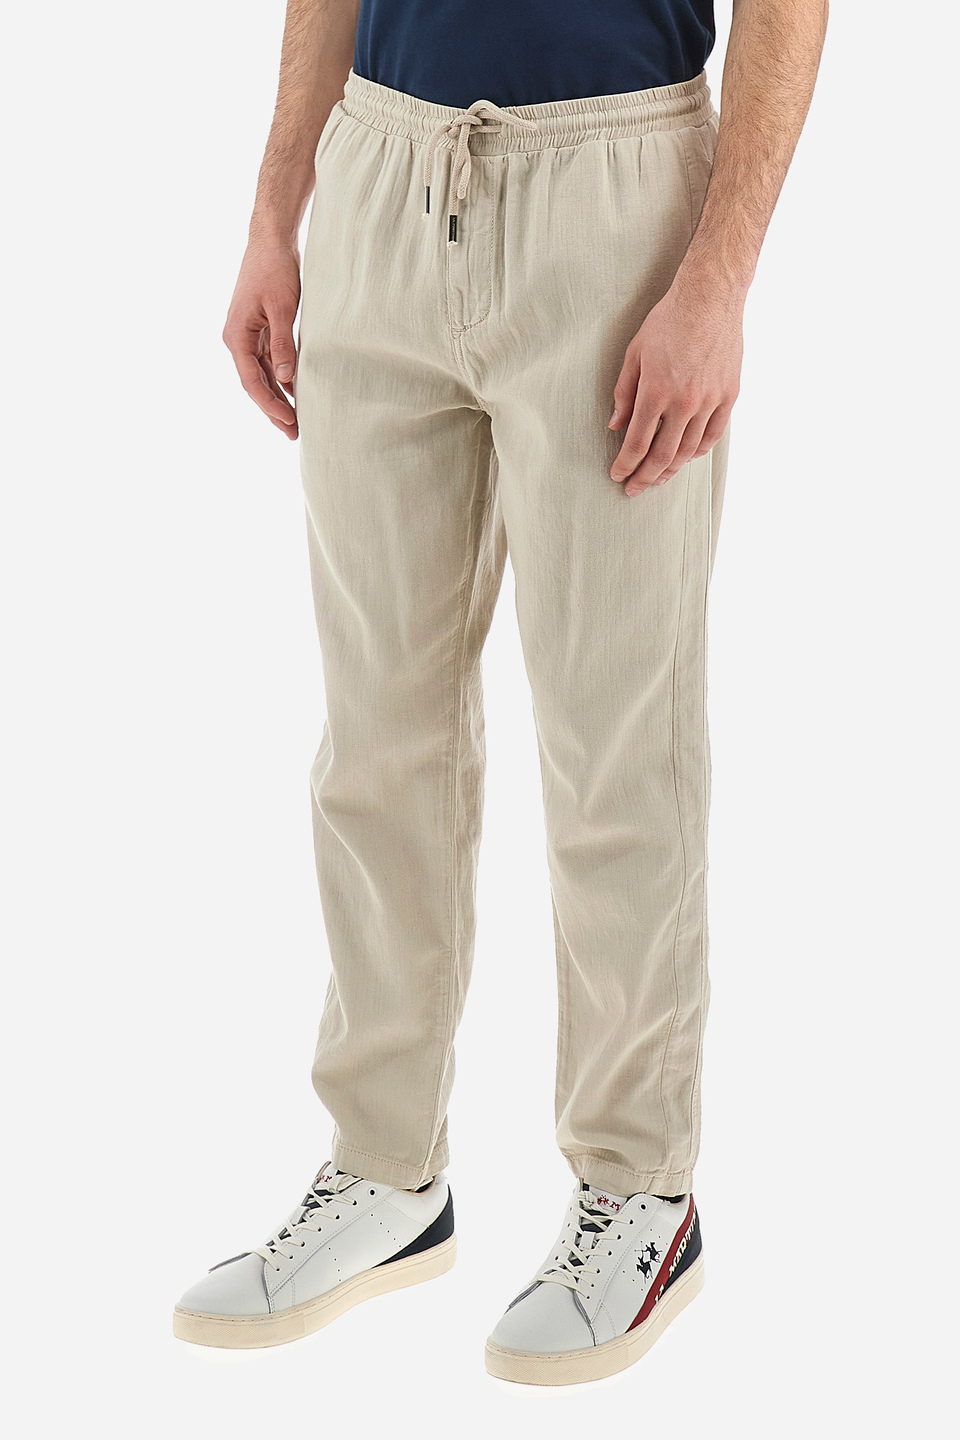 Women's Straight Leg Pant Cotton Linen Regular Fit Pant Summer Casual Pants  Drawstring Long Trousers with Pockets S-3XL M White - Walmart.com